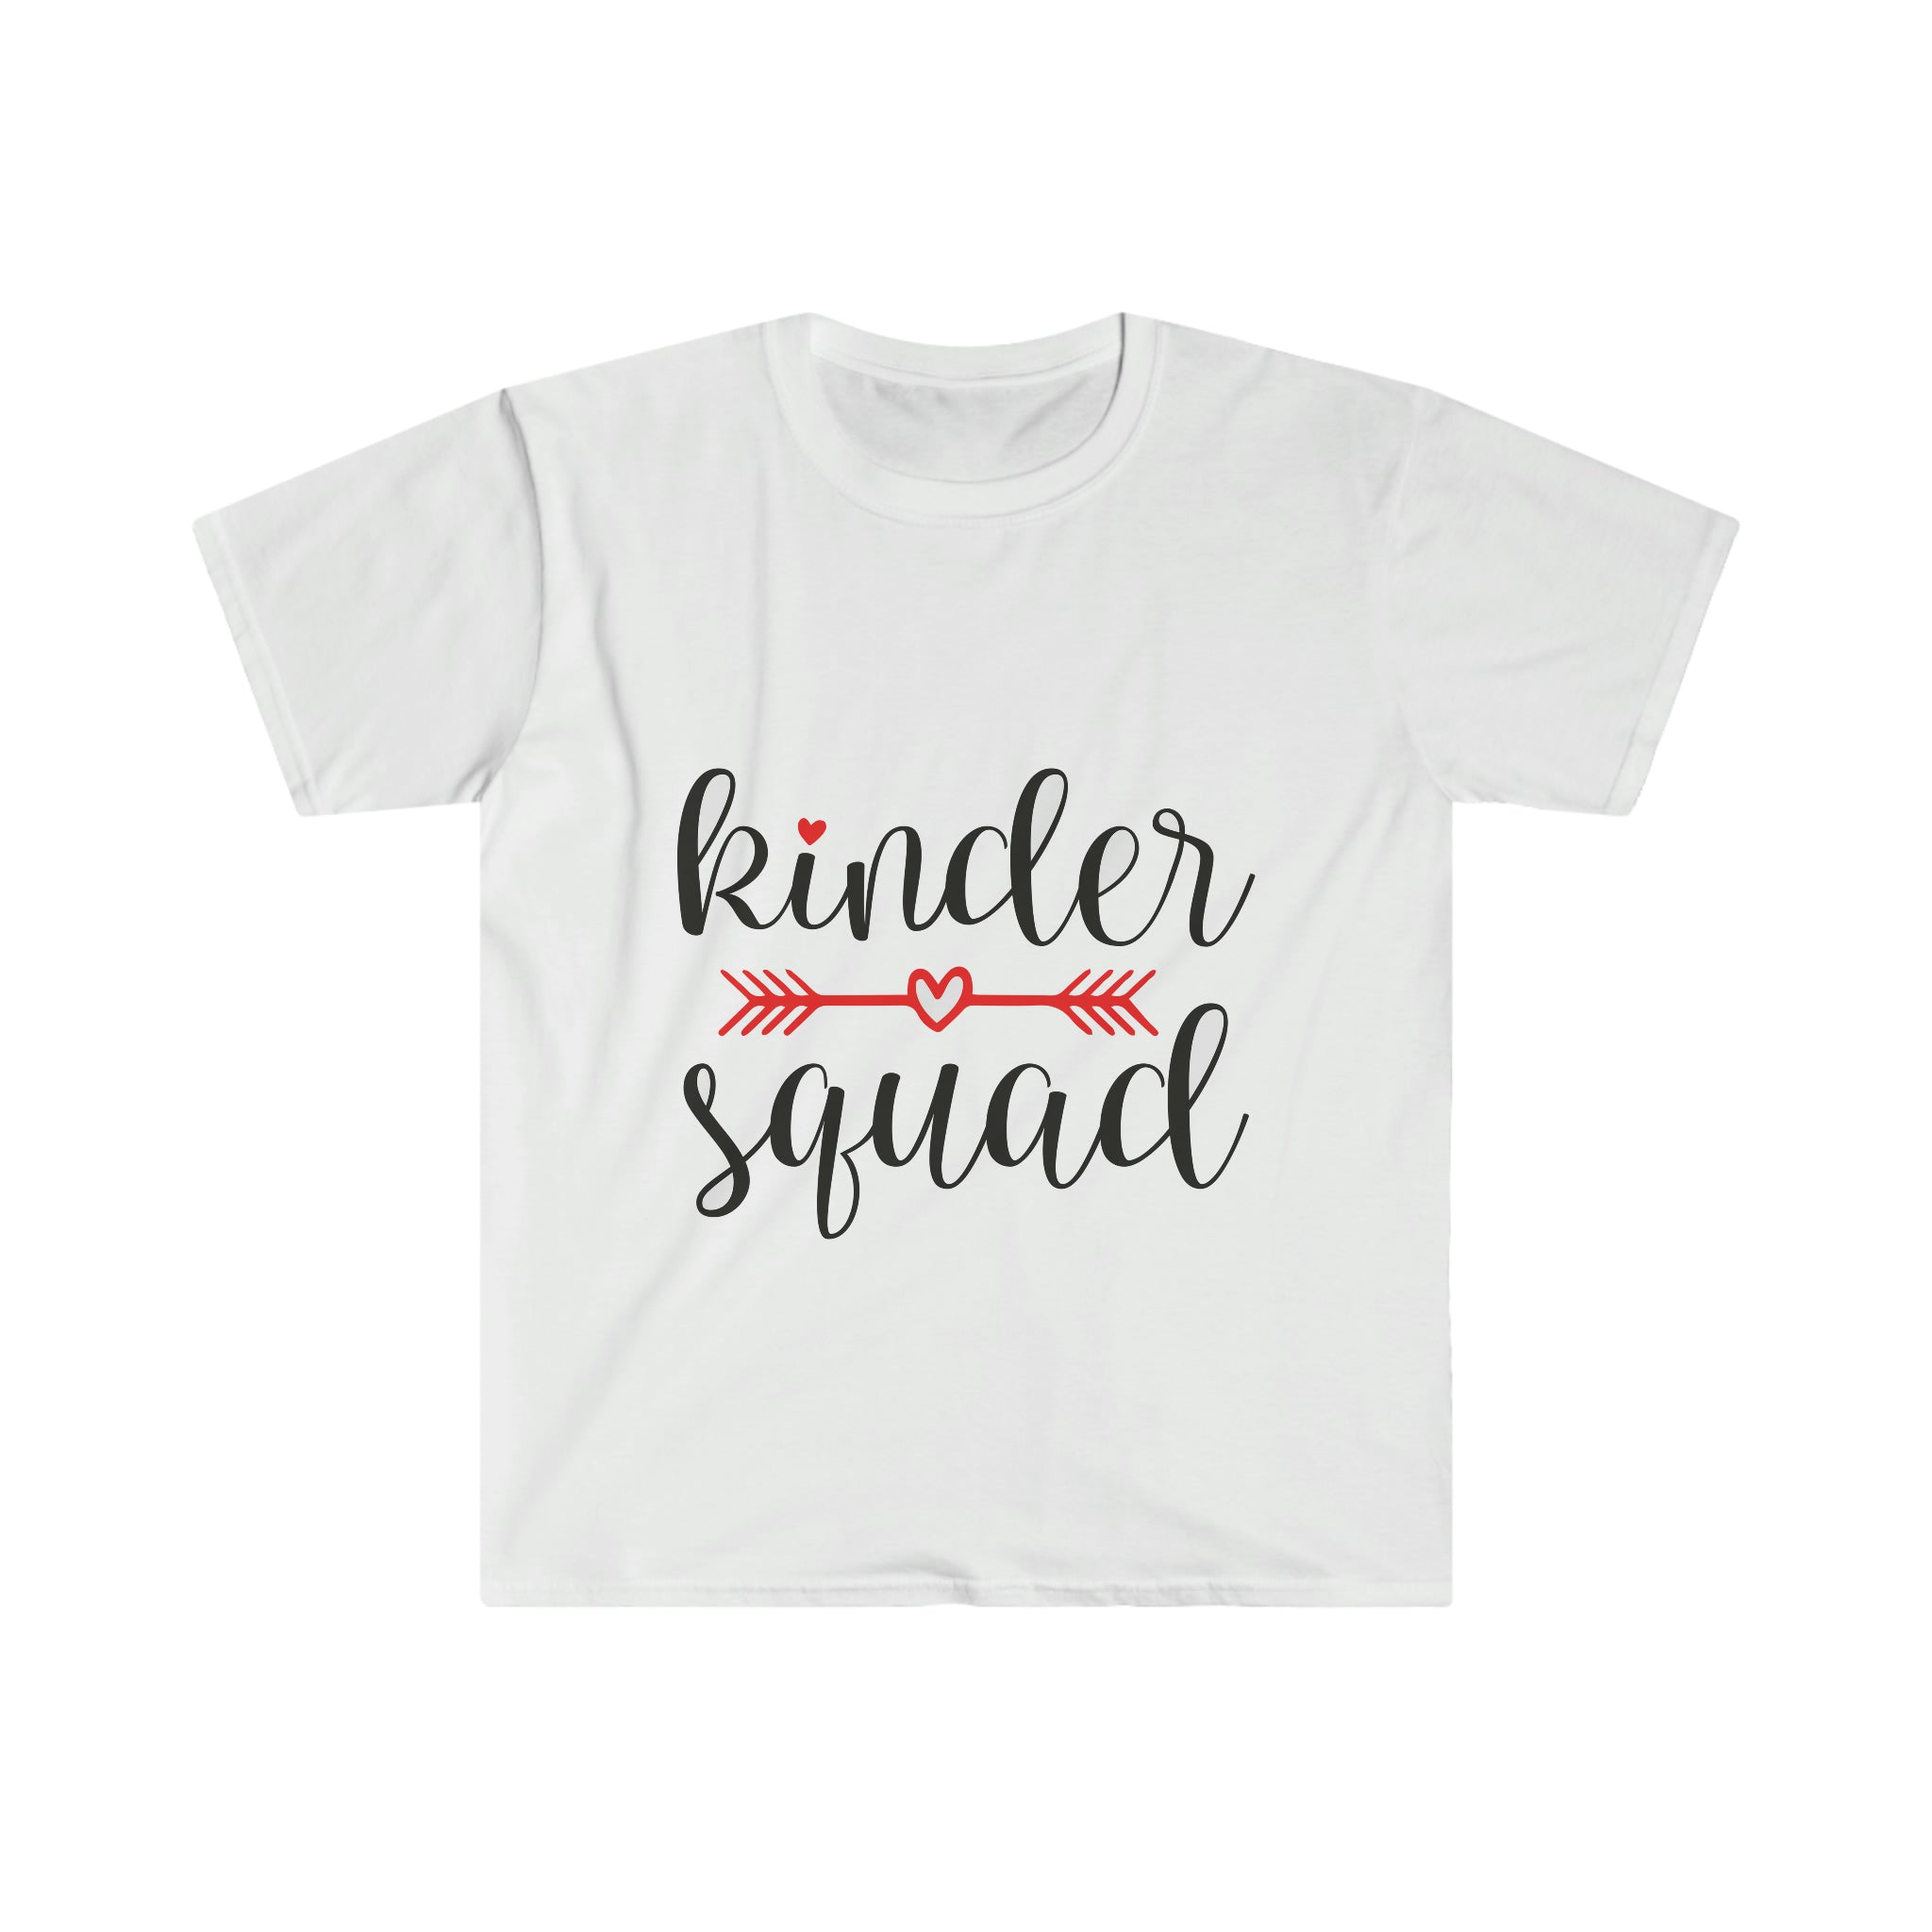 Kinder Squad T-Shirt